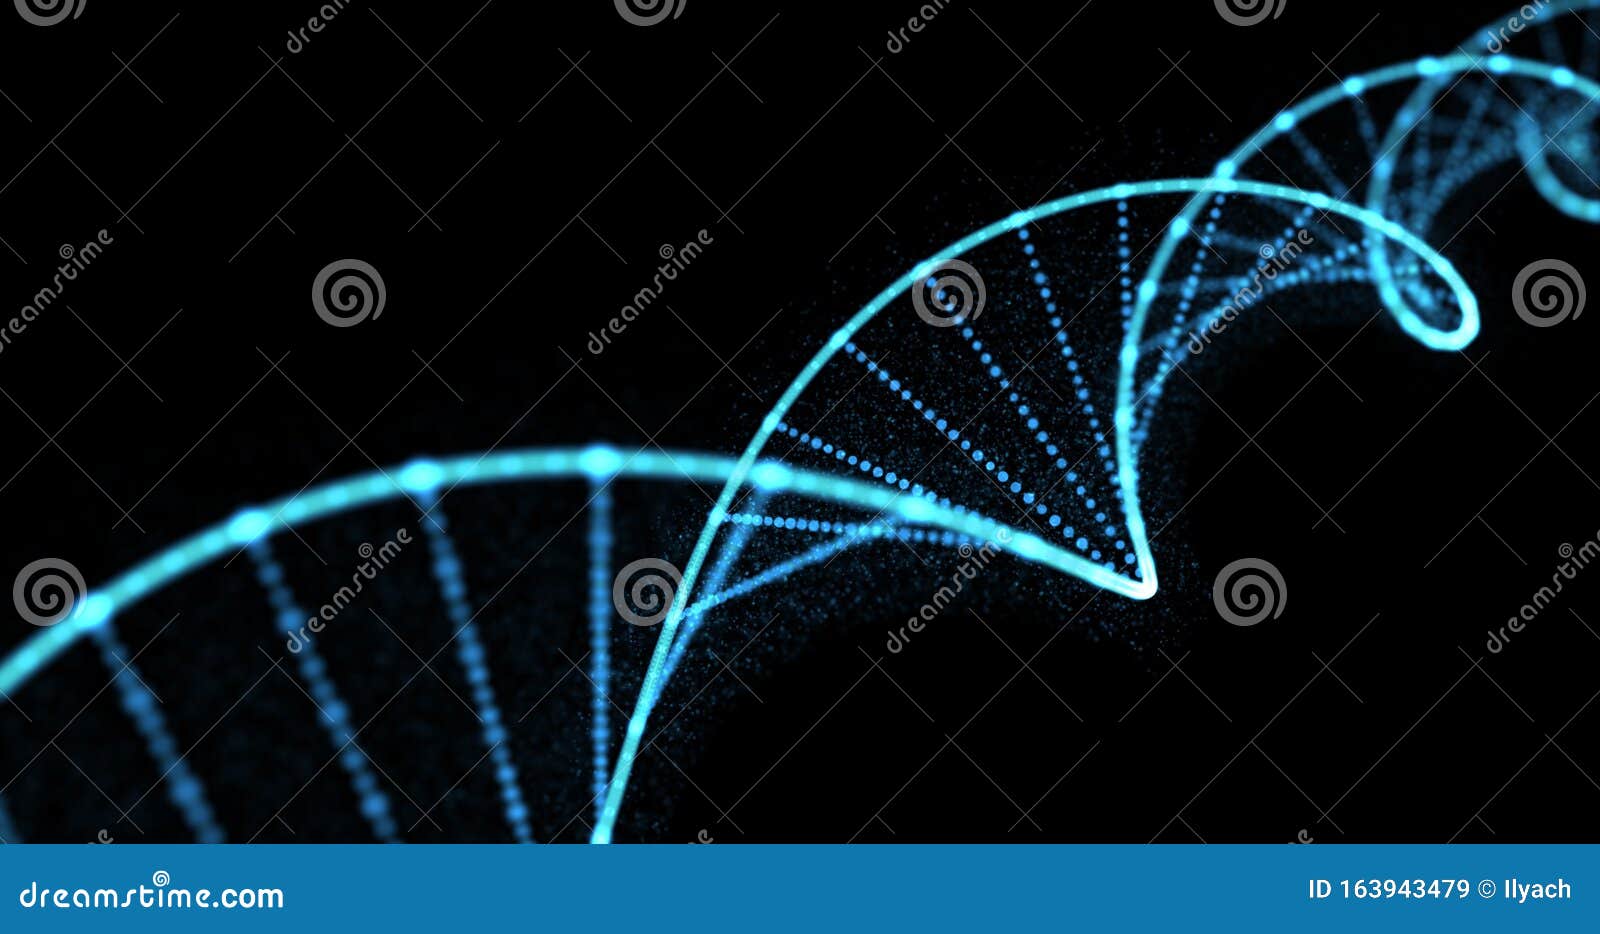 dna helix, gene molecule and genetic chromosome cell, 3d spiral loop. human dna molecule blue light on black background